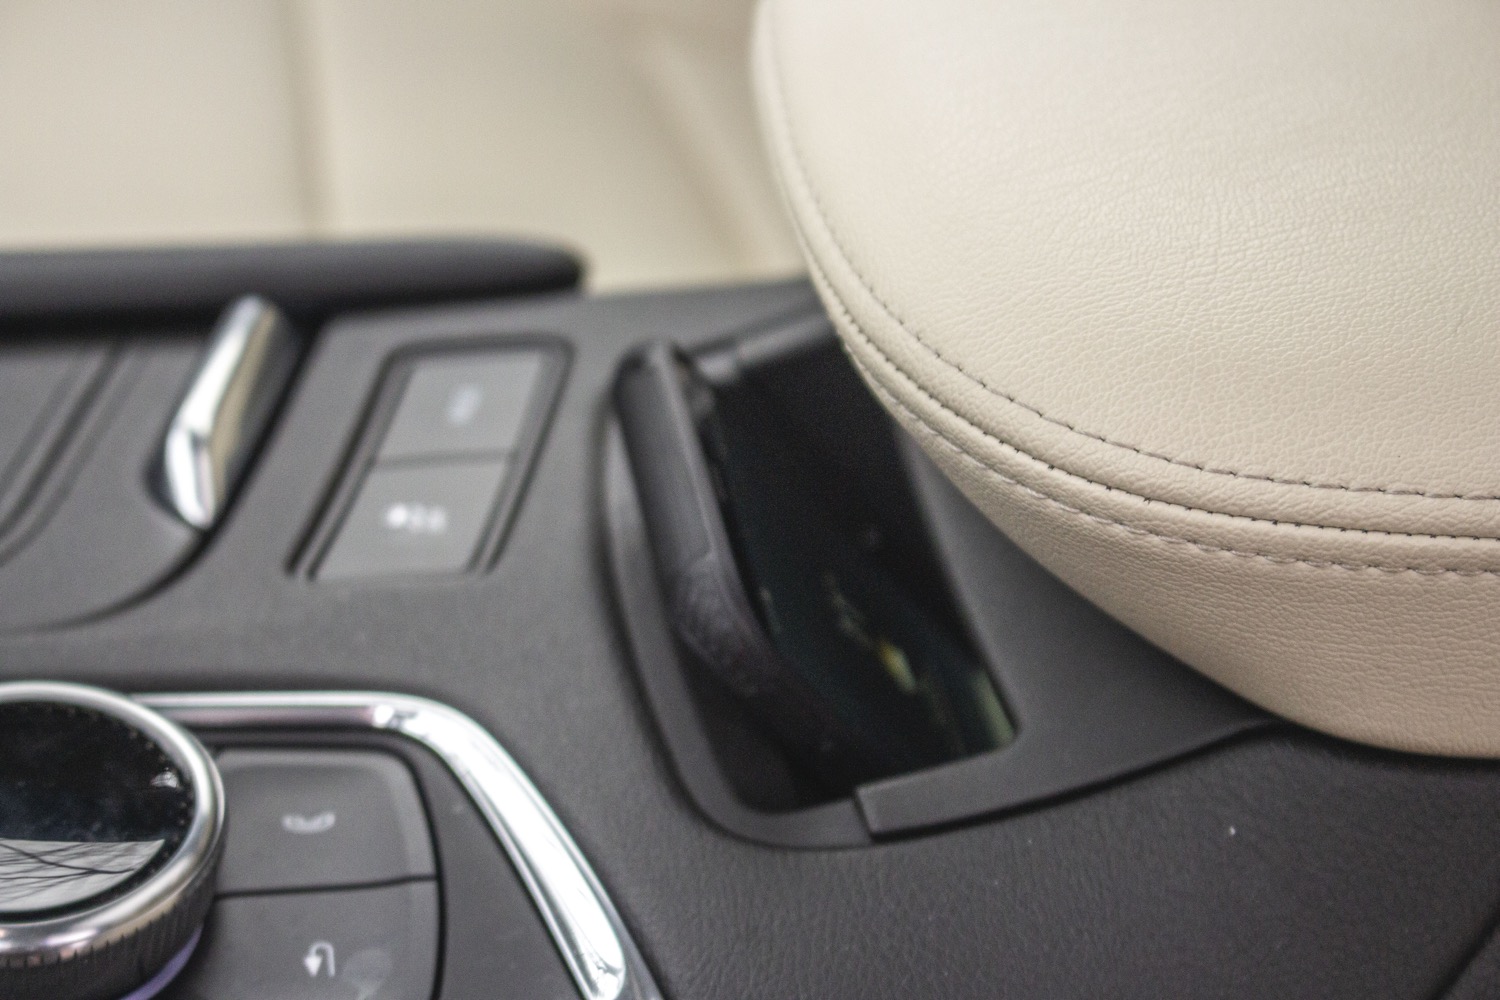 2020 Cadillac XT5 Features Next-Gen Wireless Smartphone Charging